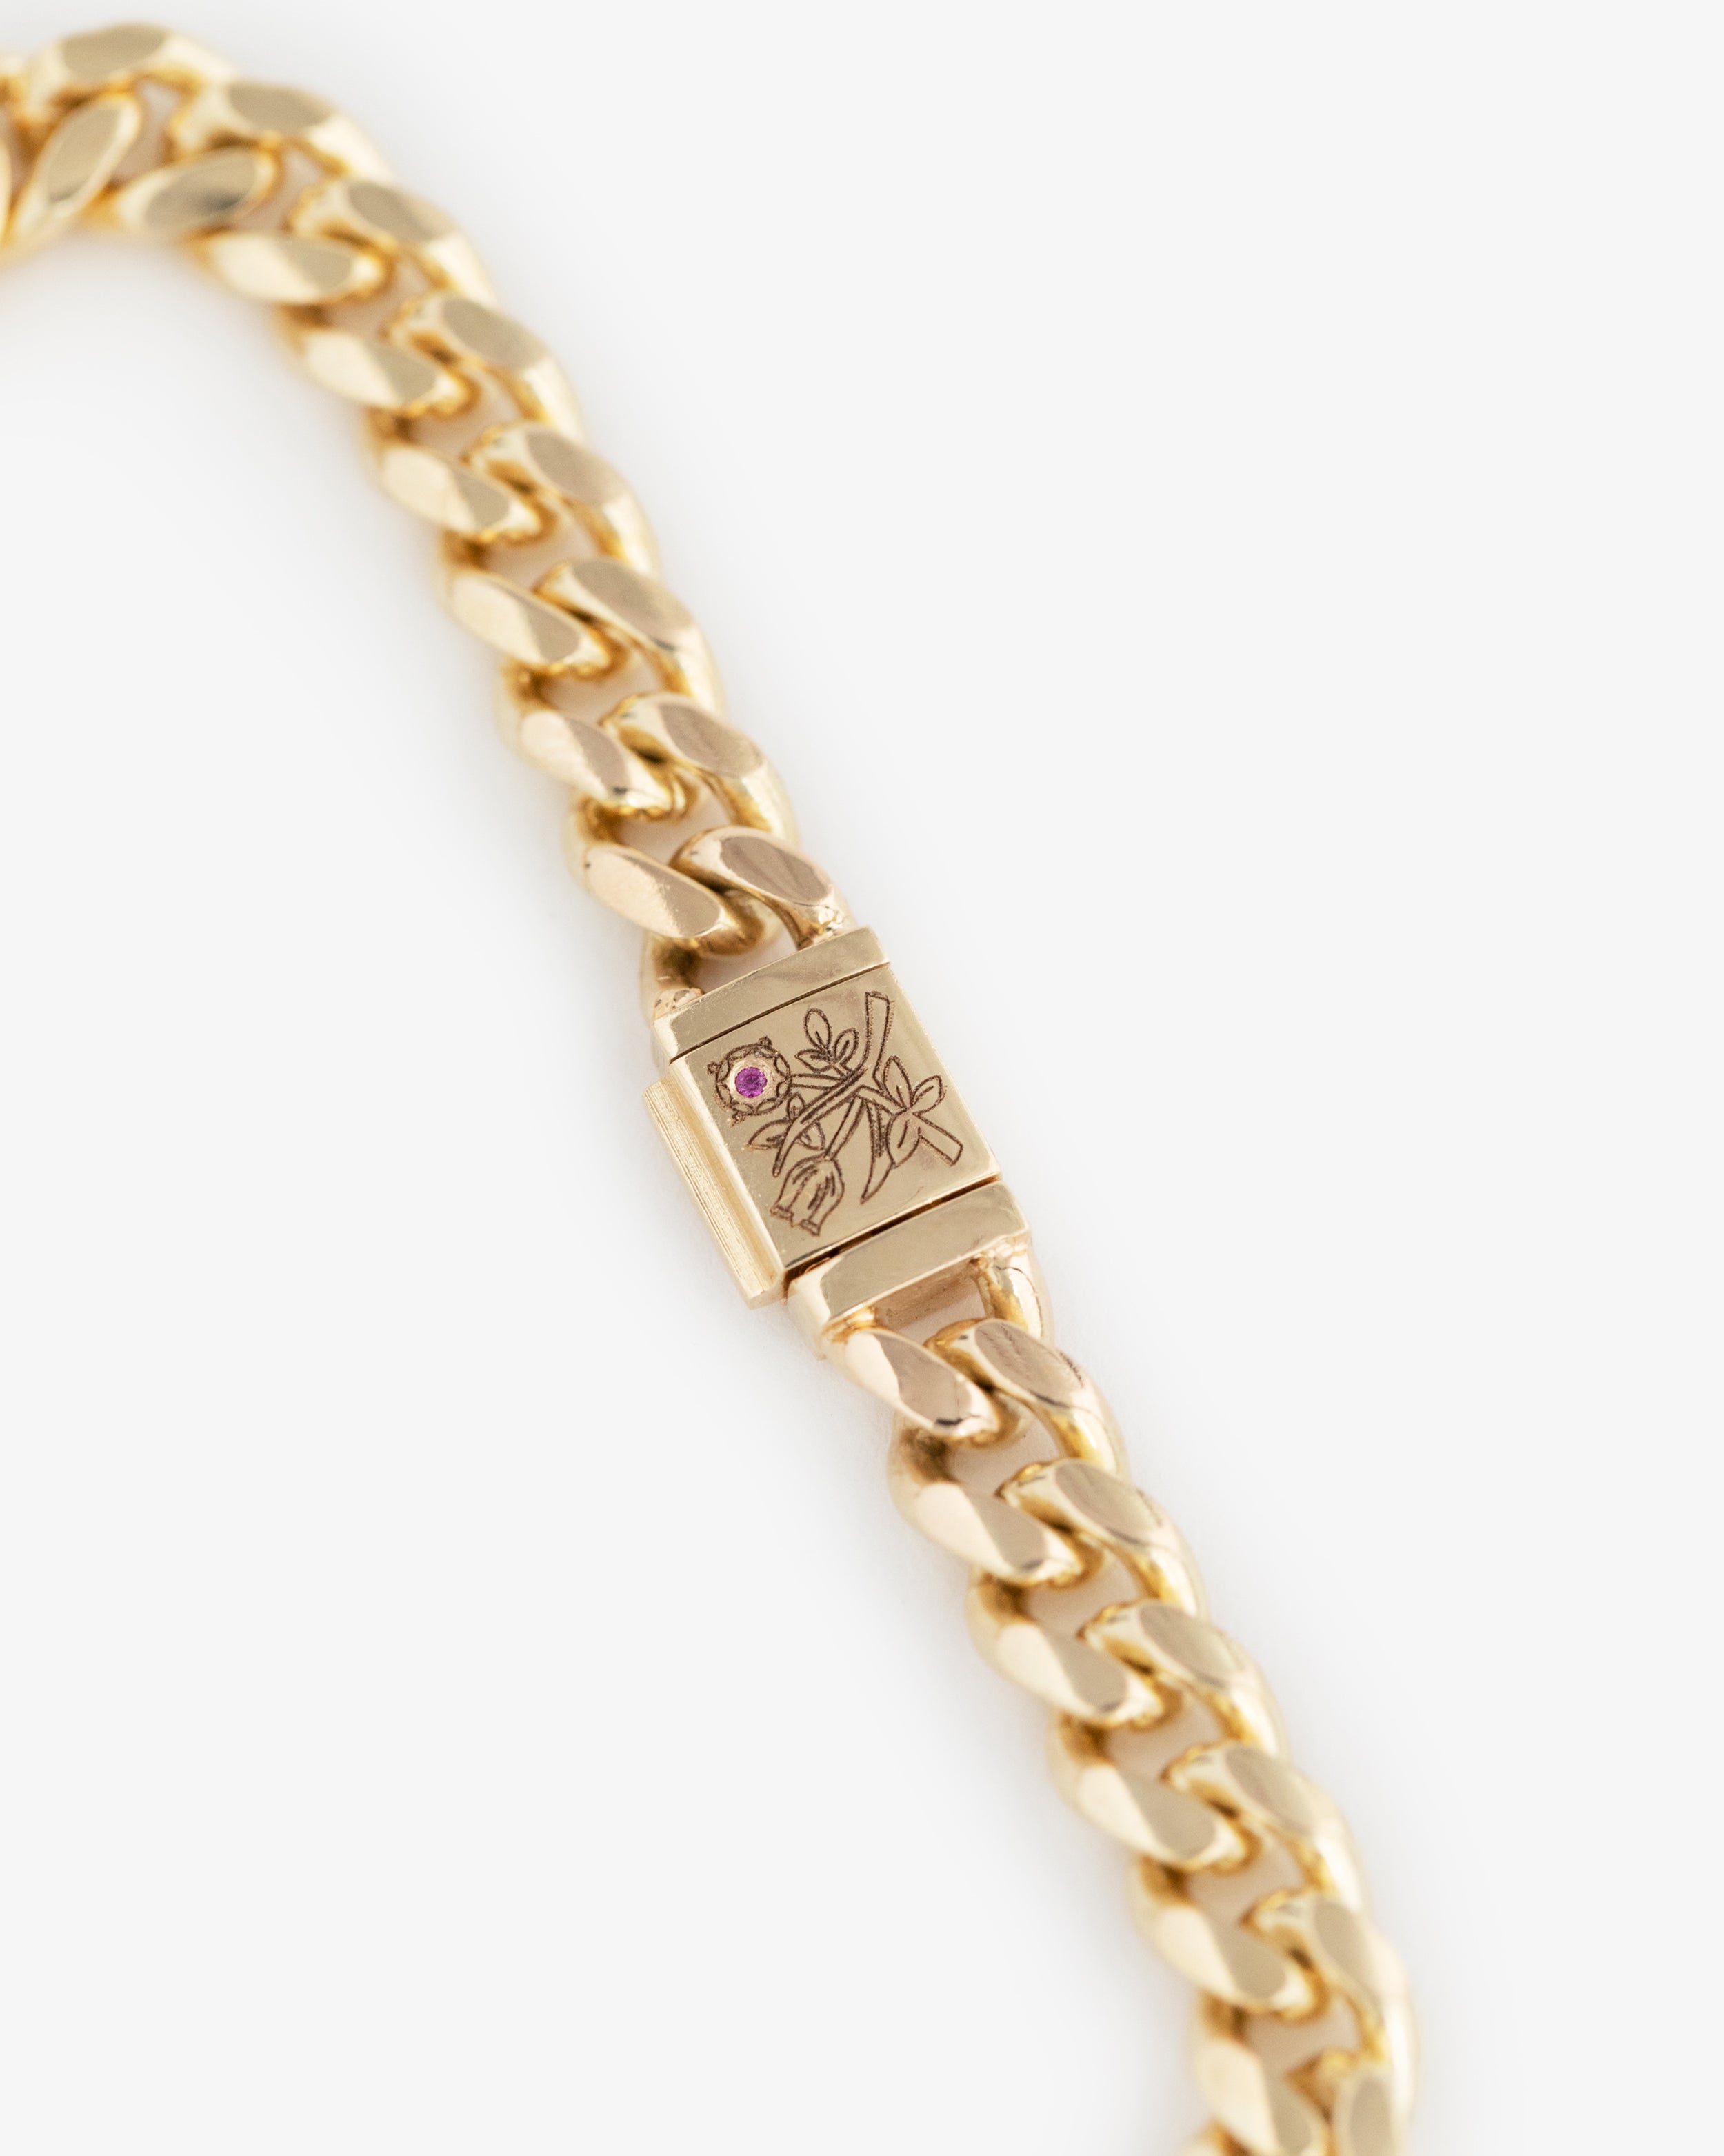 Gold Gods Miami Cuban Link Bracelet